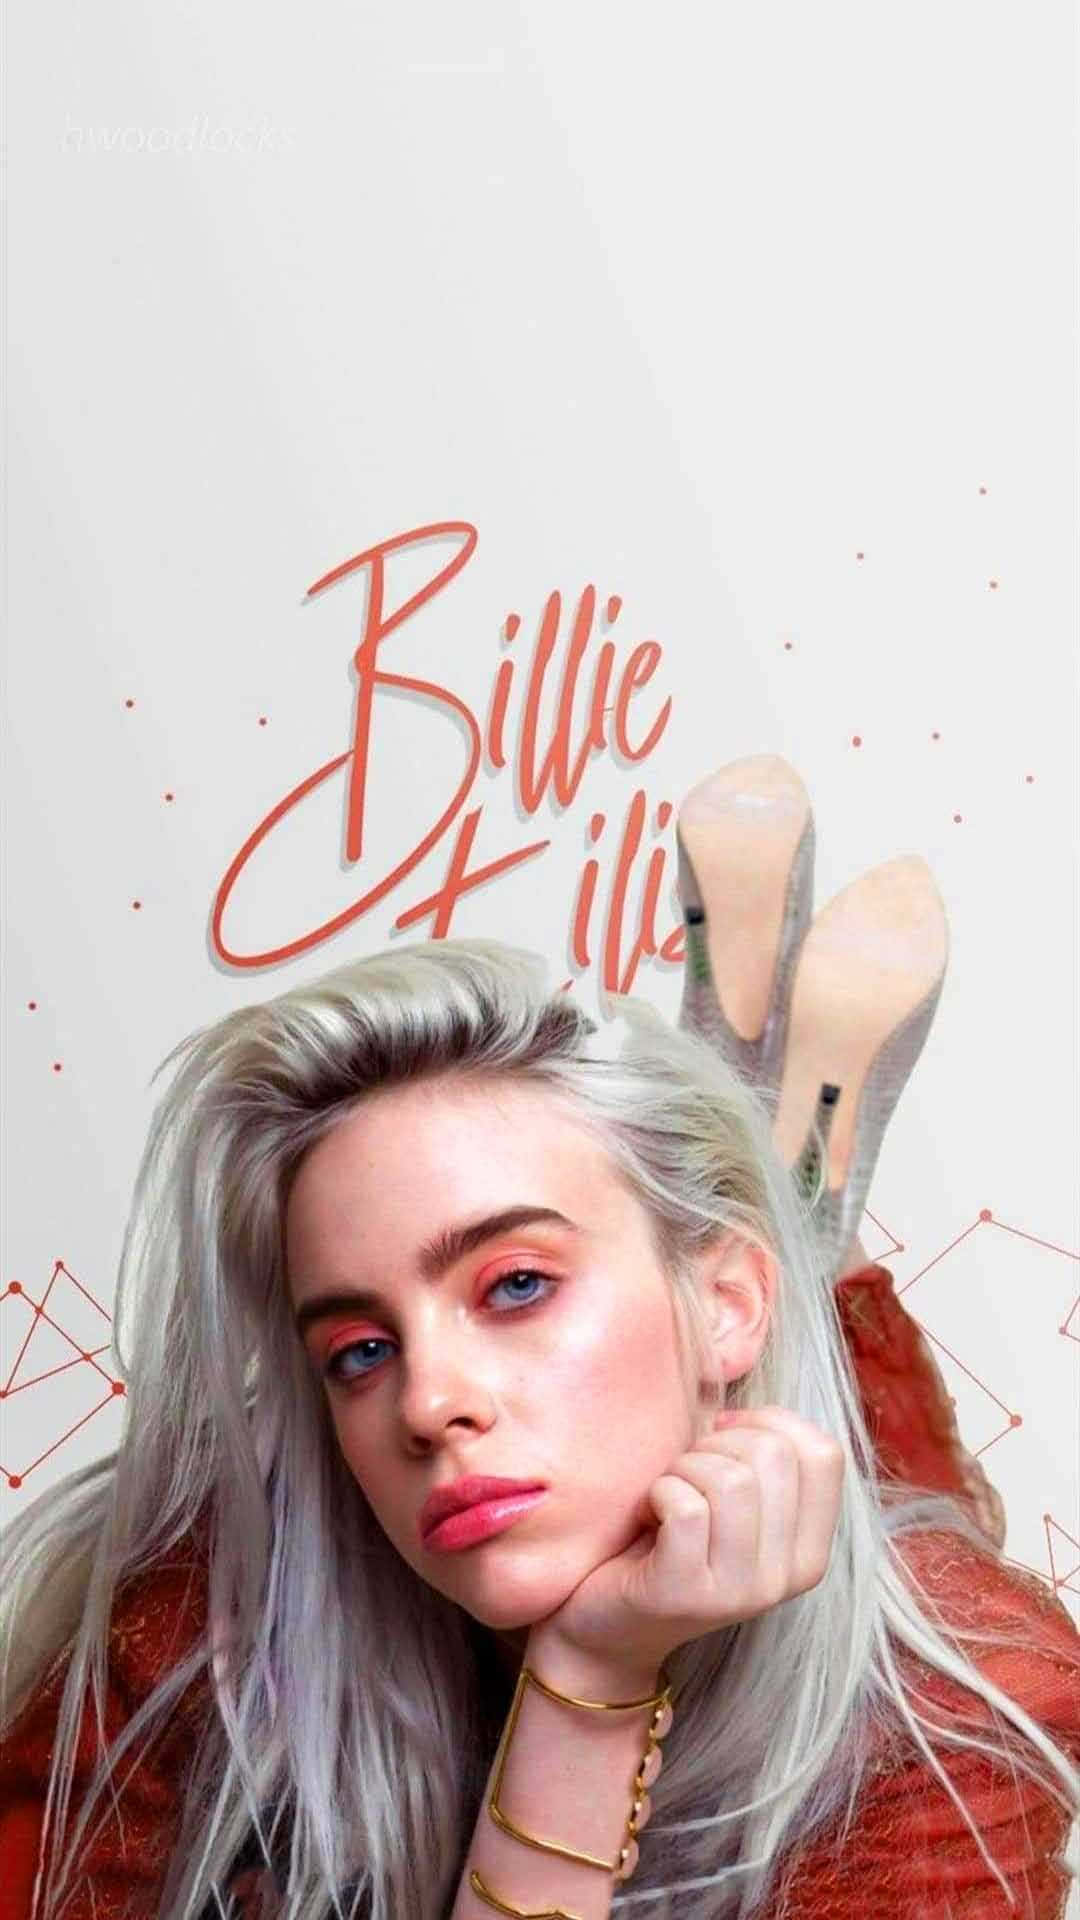 Billie Eilish 2021 Pictures Wallpaper